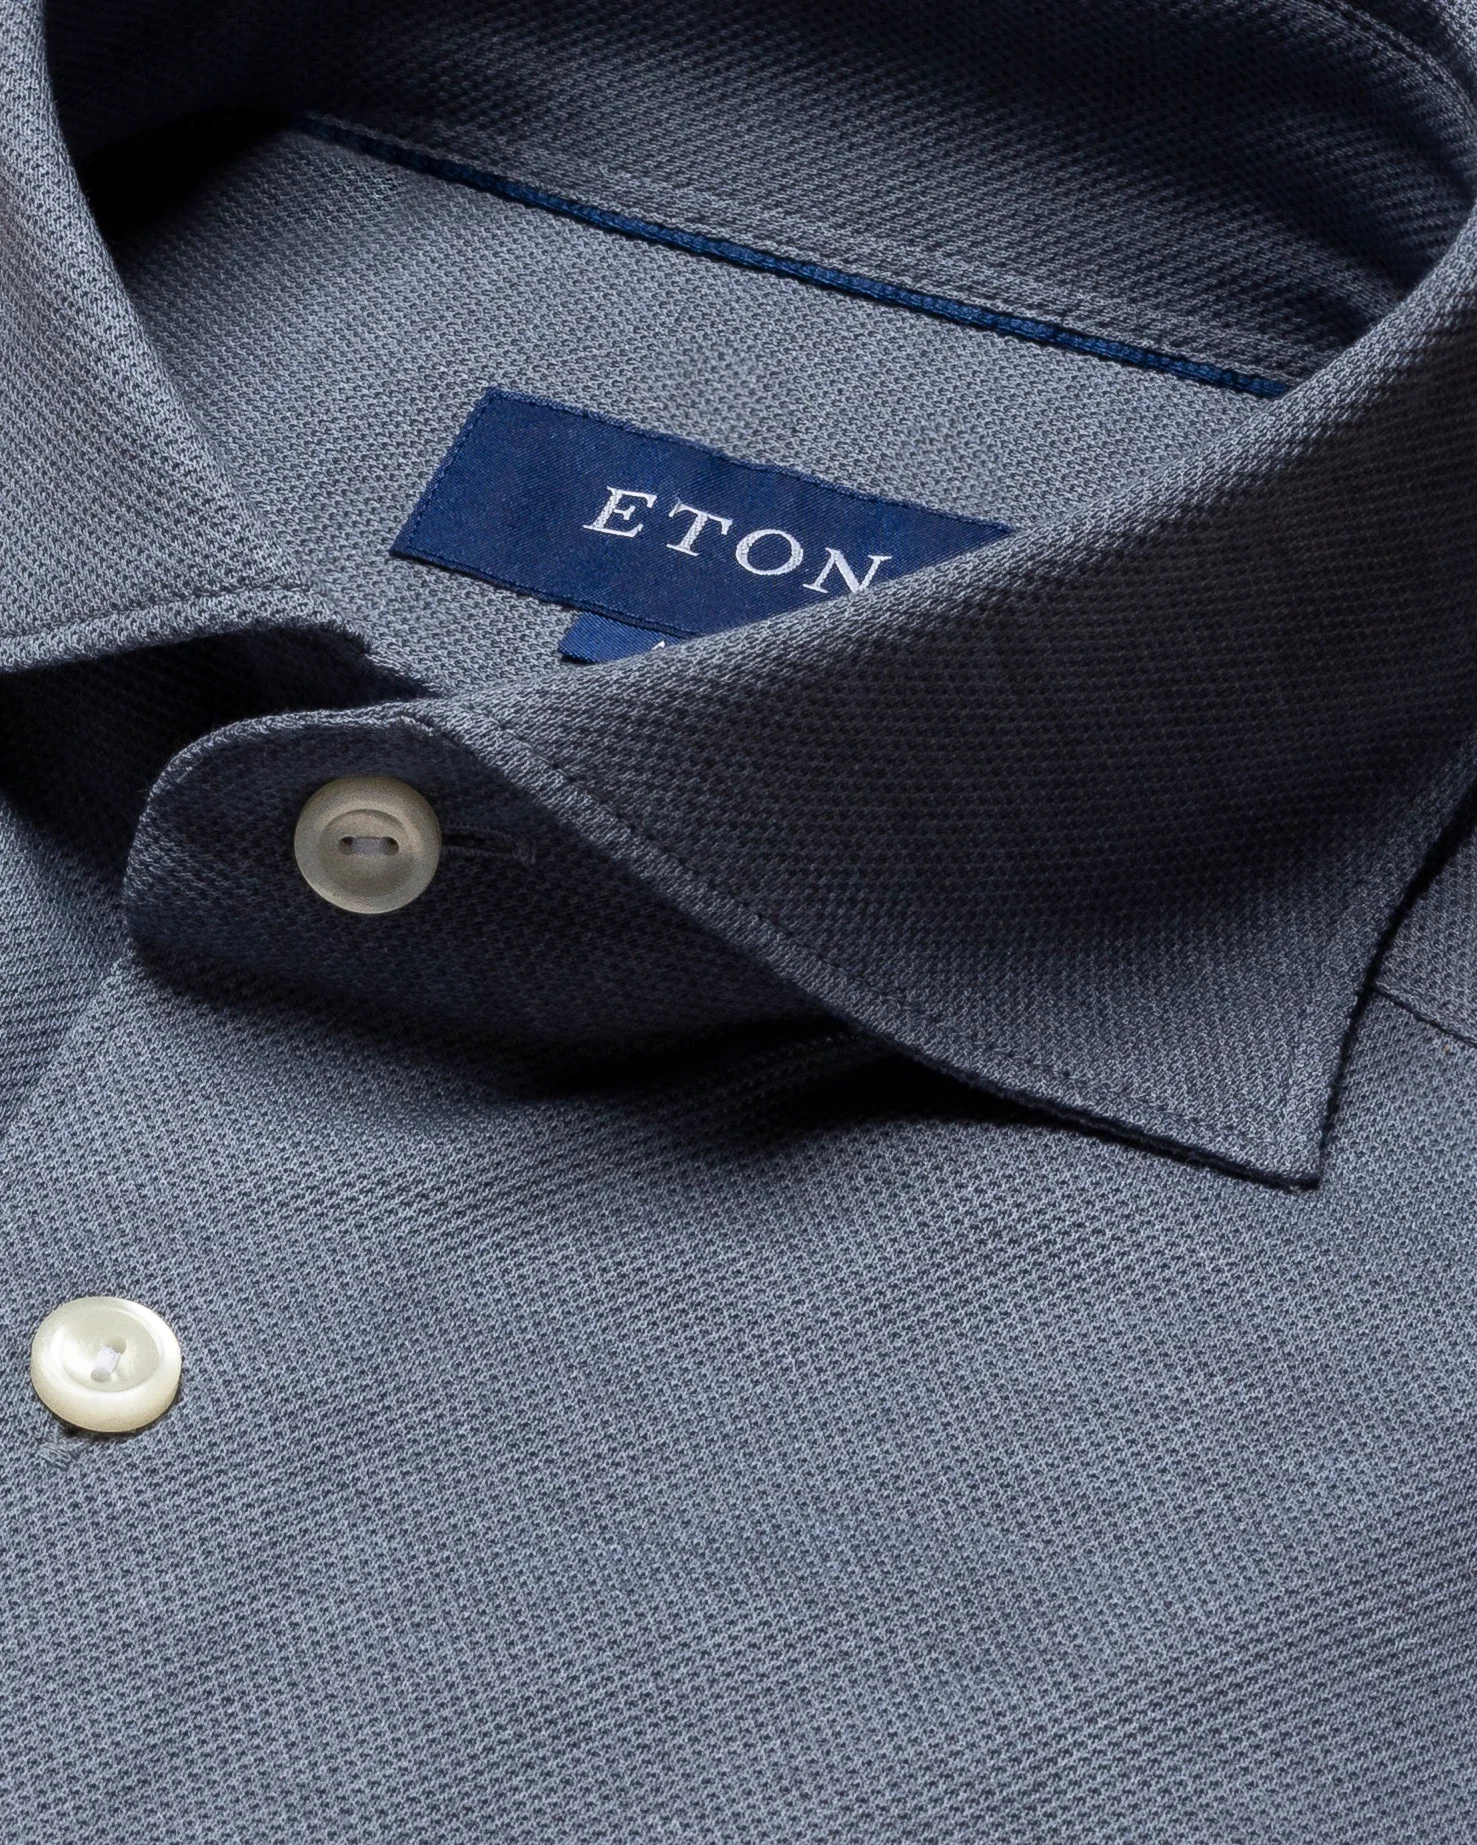 Eton - blue pique shirt long sleeve